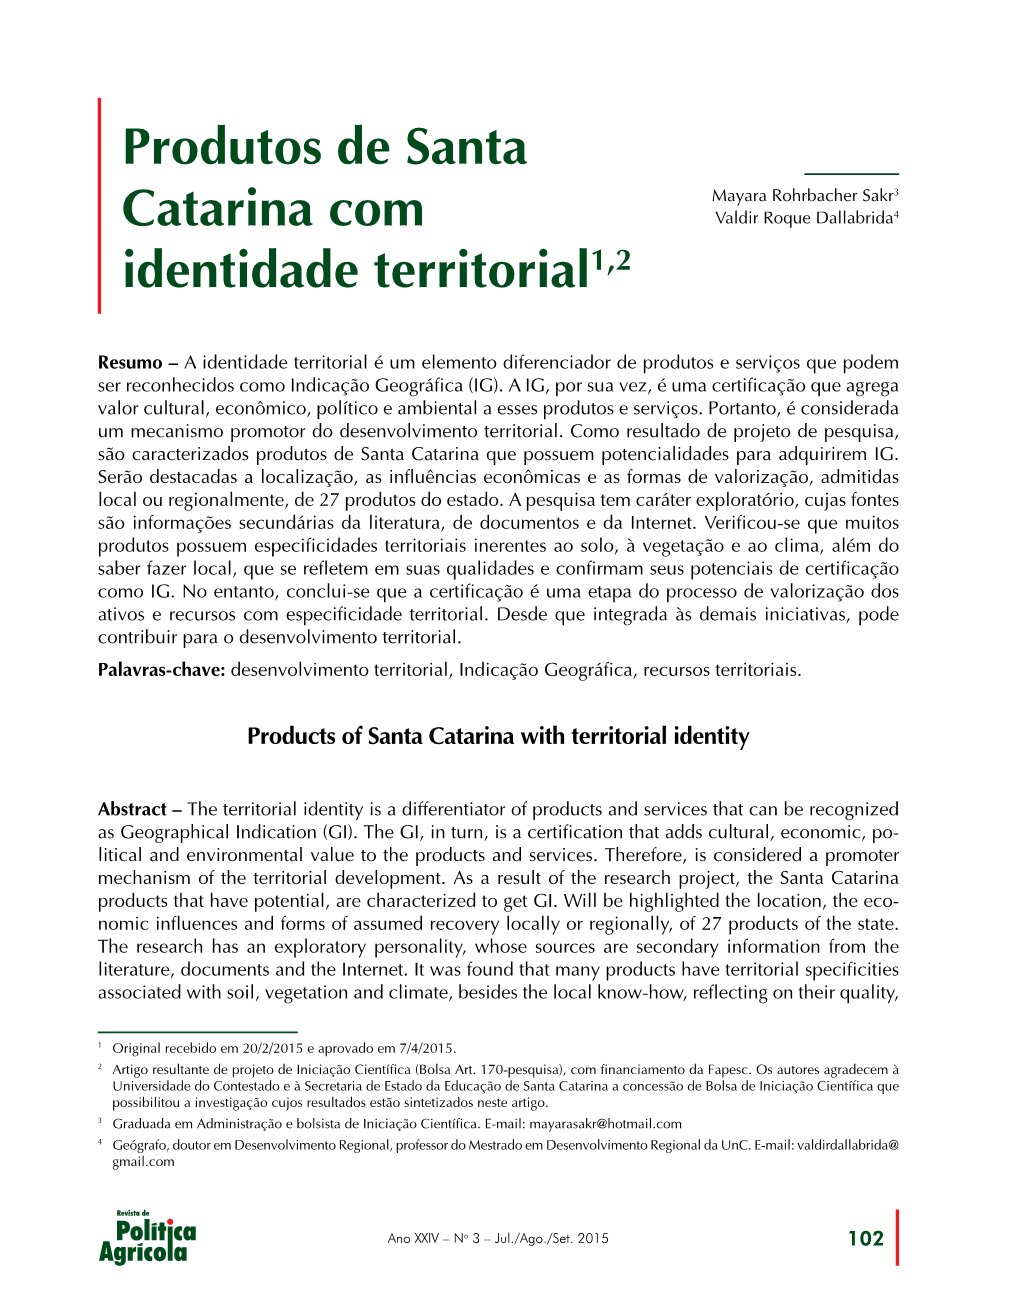 Produtos De Santa Catarina Com Identidade Territorial1,2